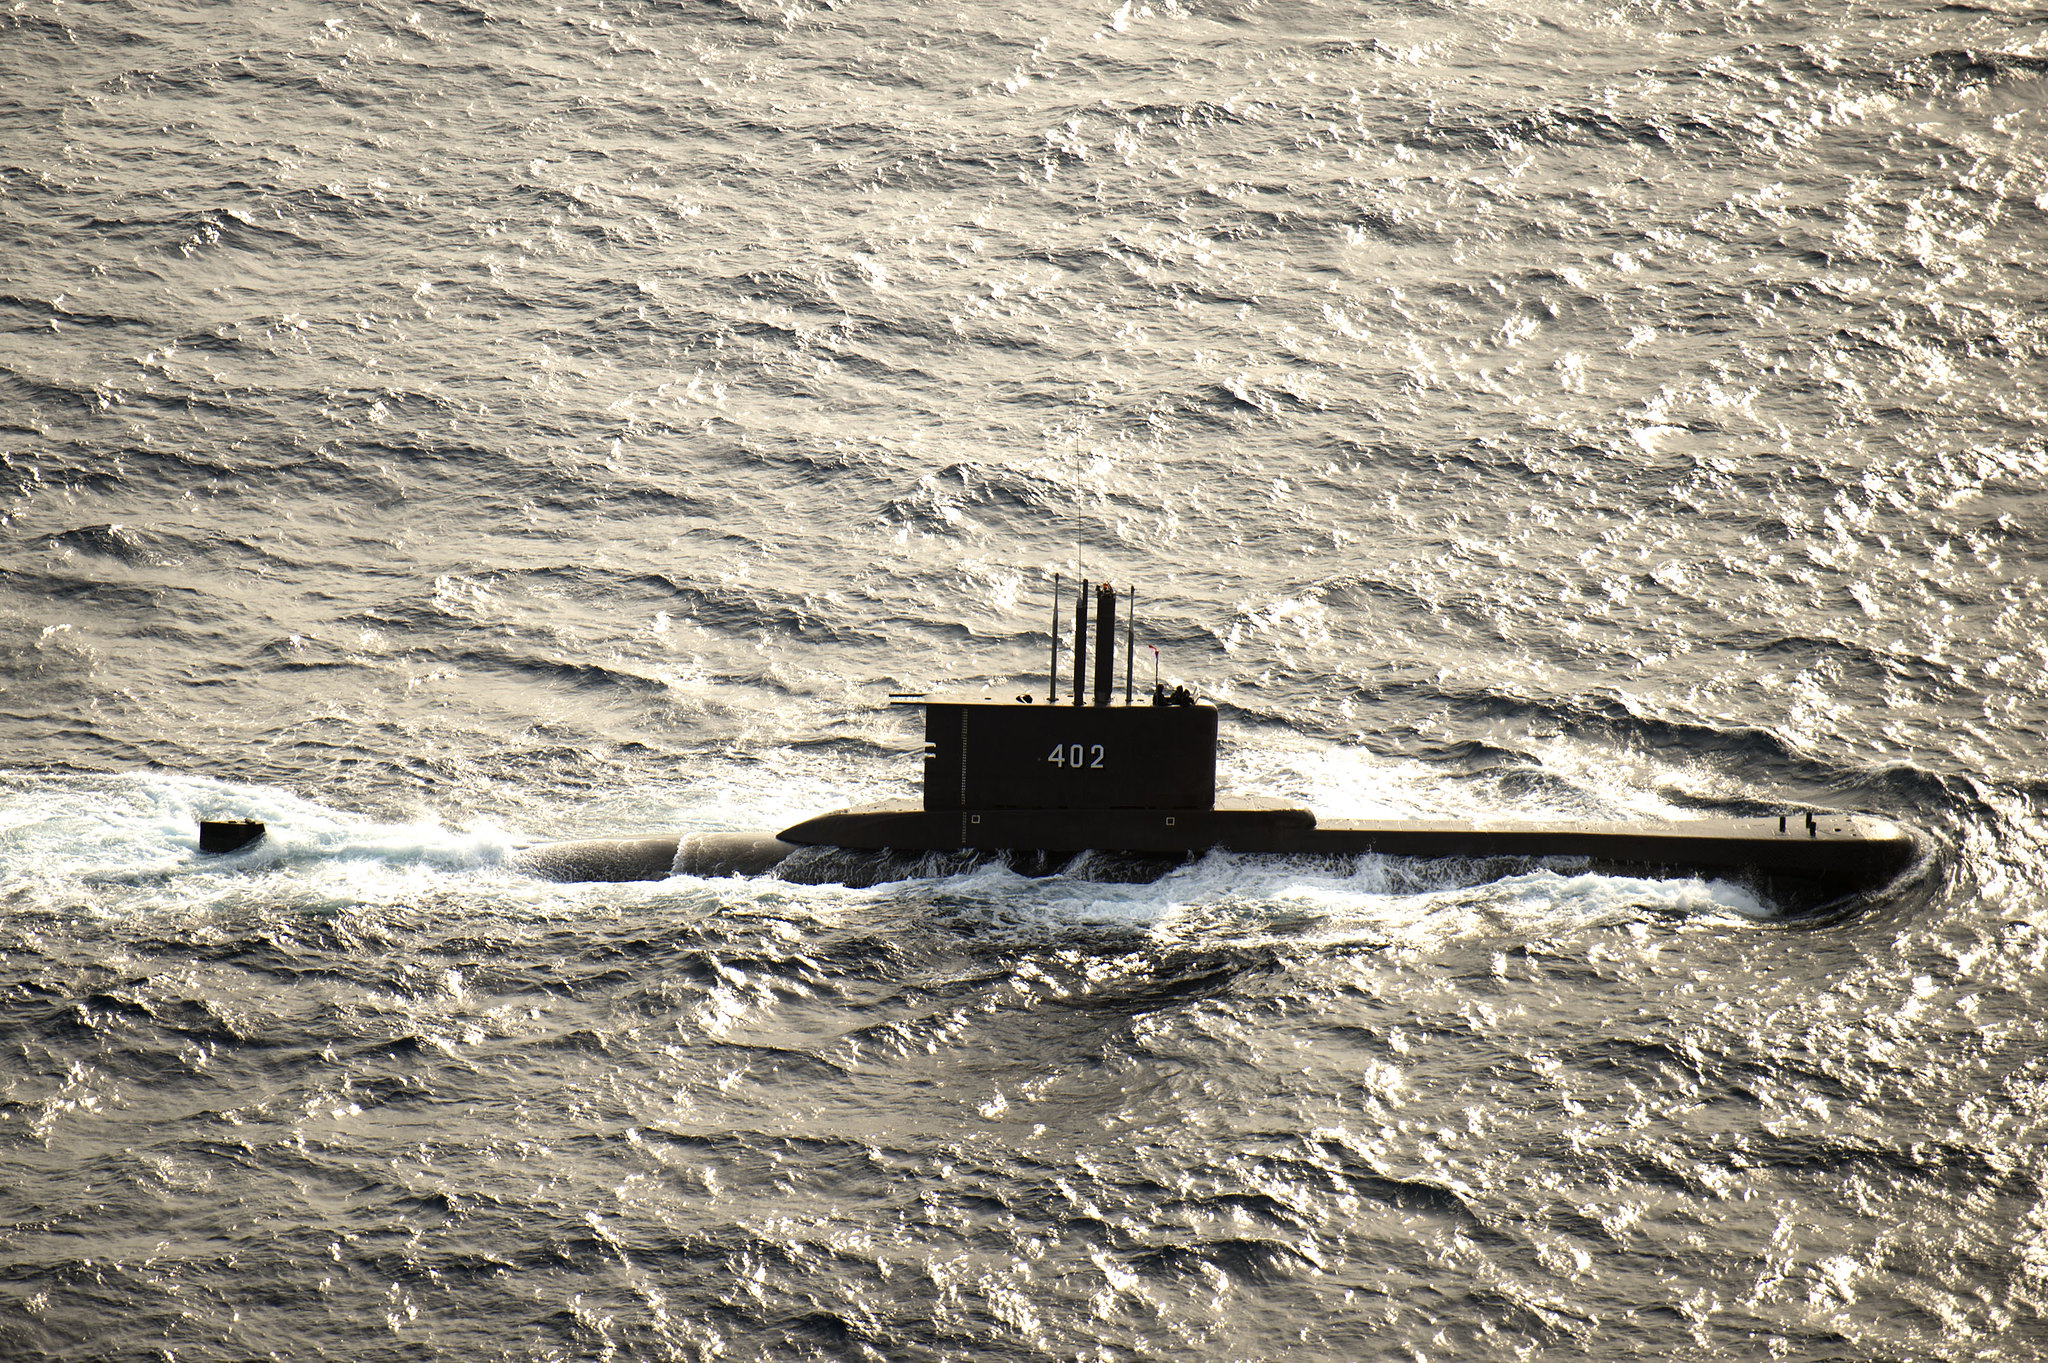 Indonesia to salvage sunken submarine